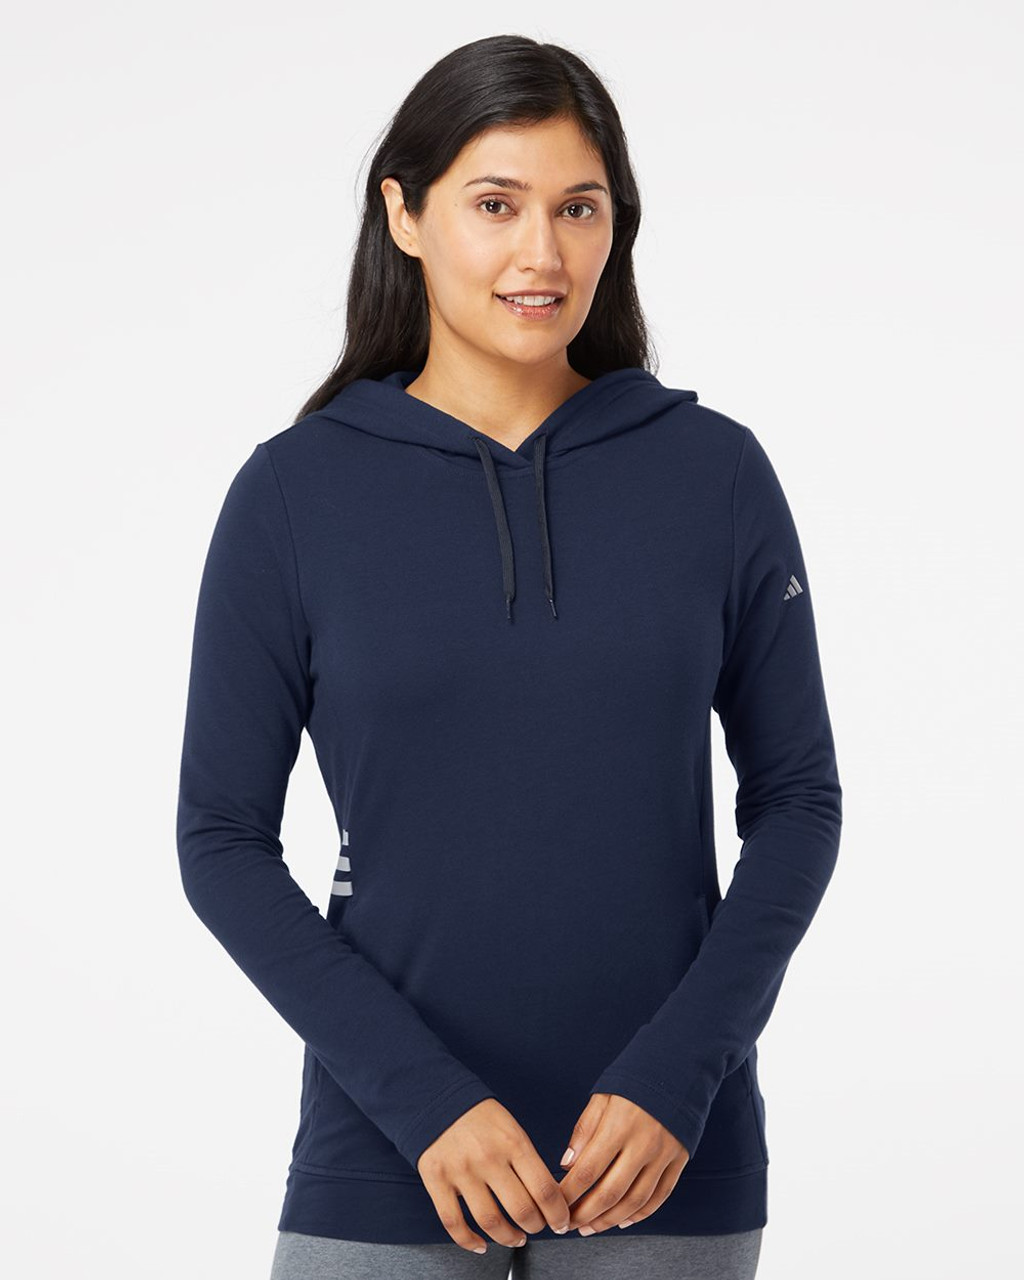 Custom Women's Lightweight Hooded Sweatshirt - A451